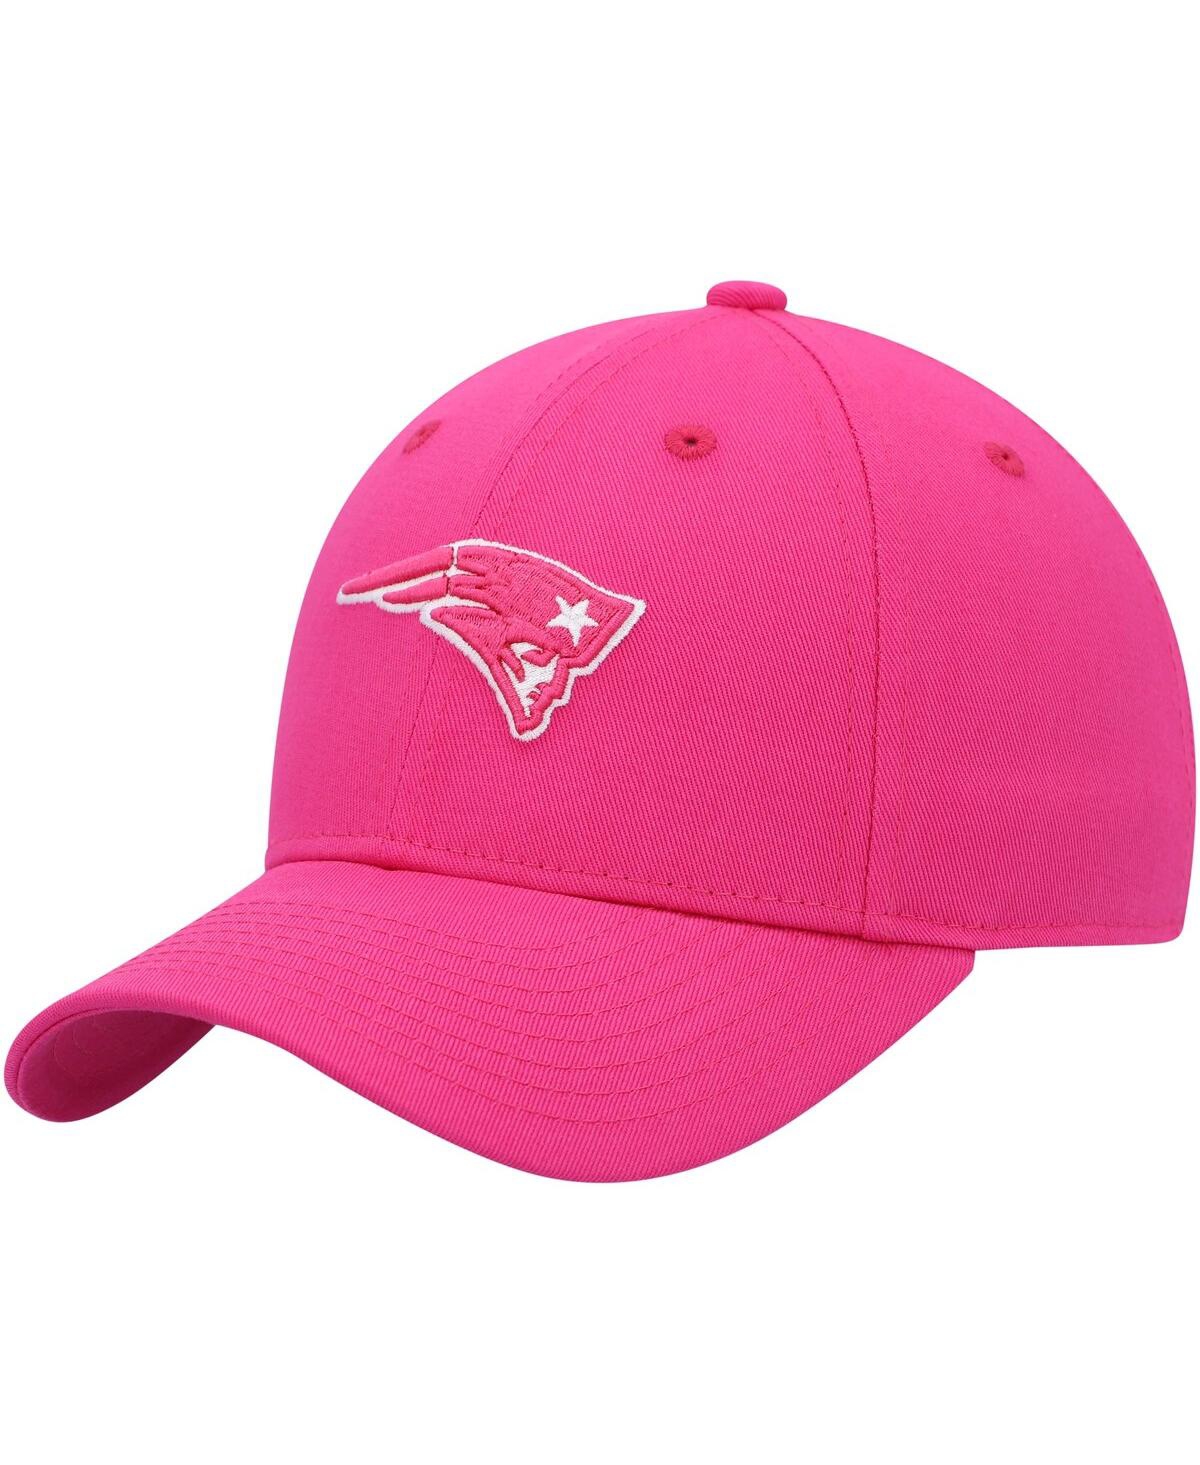 Shop Outerstuff Big Girls Pink New England Patriots Structured Adjustable Hat